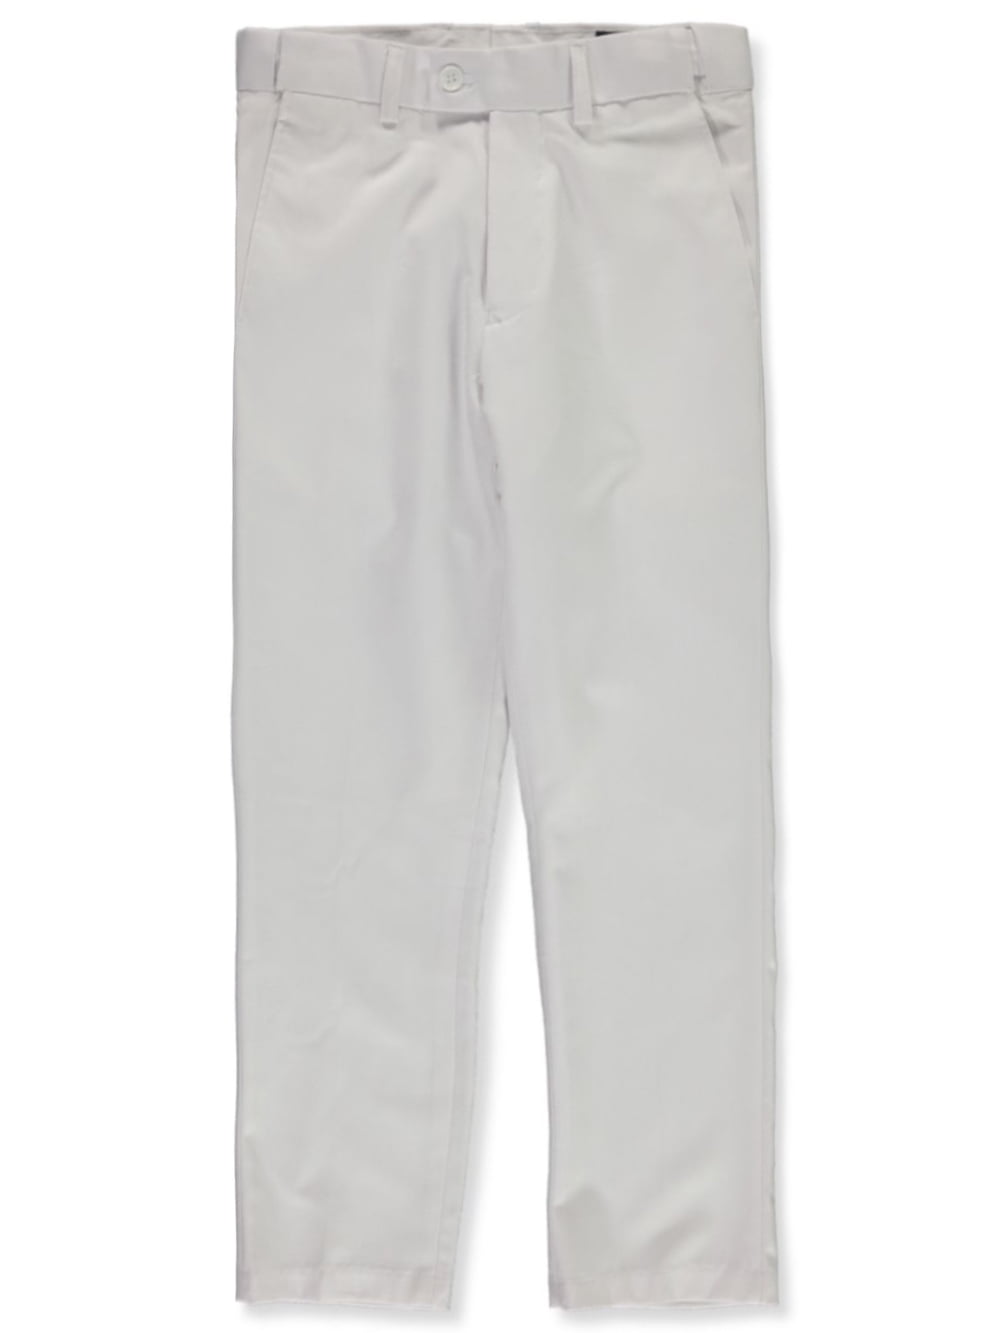 Boys White Trousers Factory Sale, SAVE 51% - blw.hu